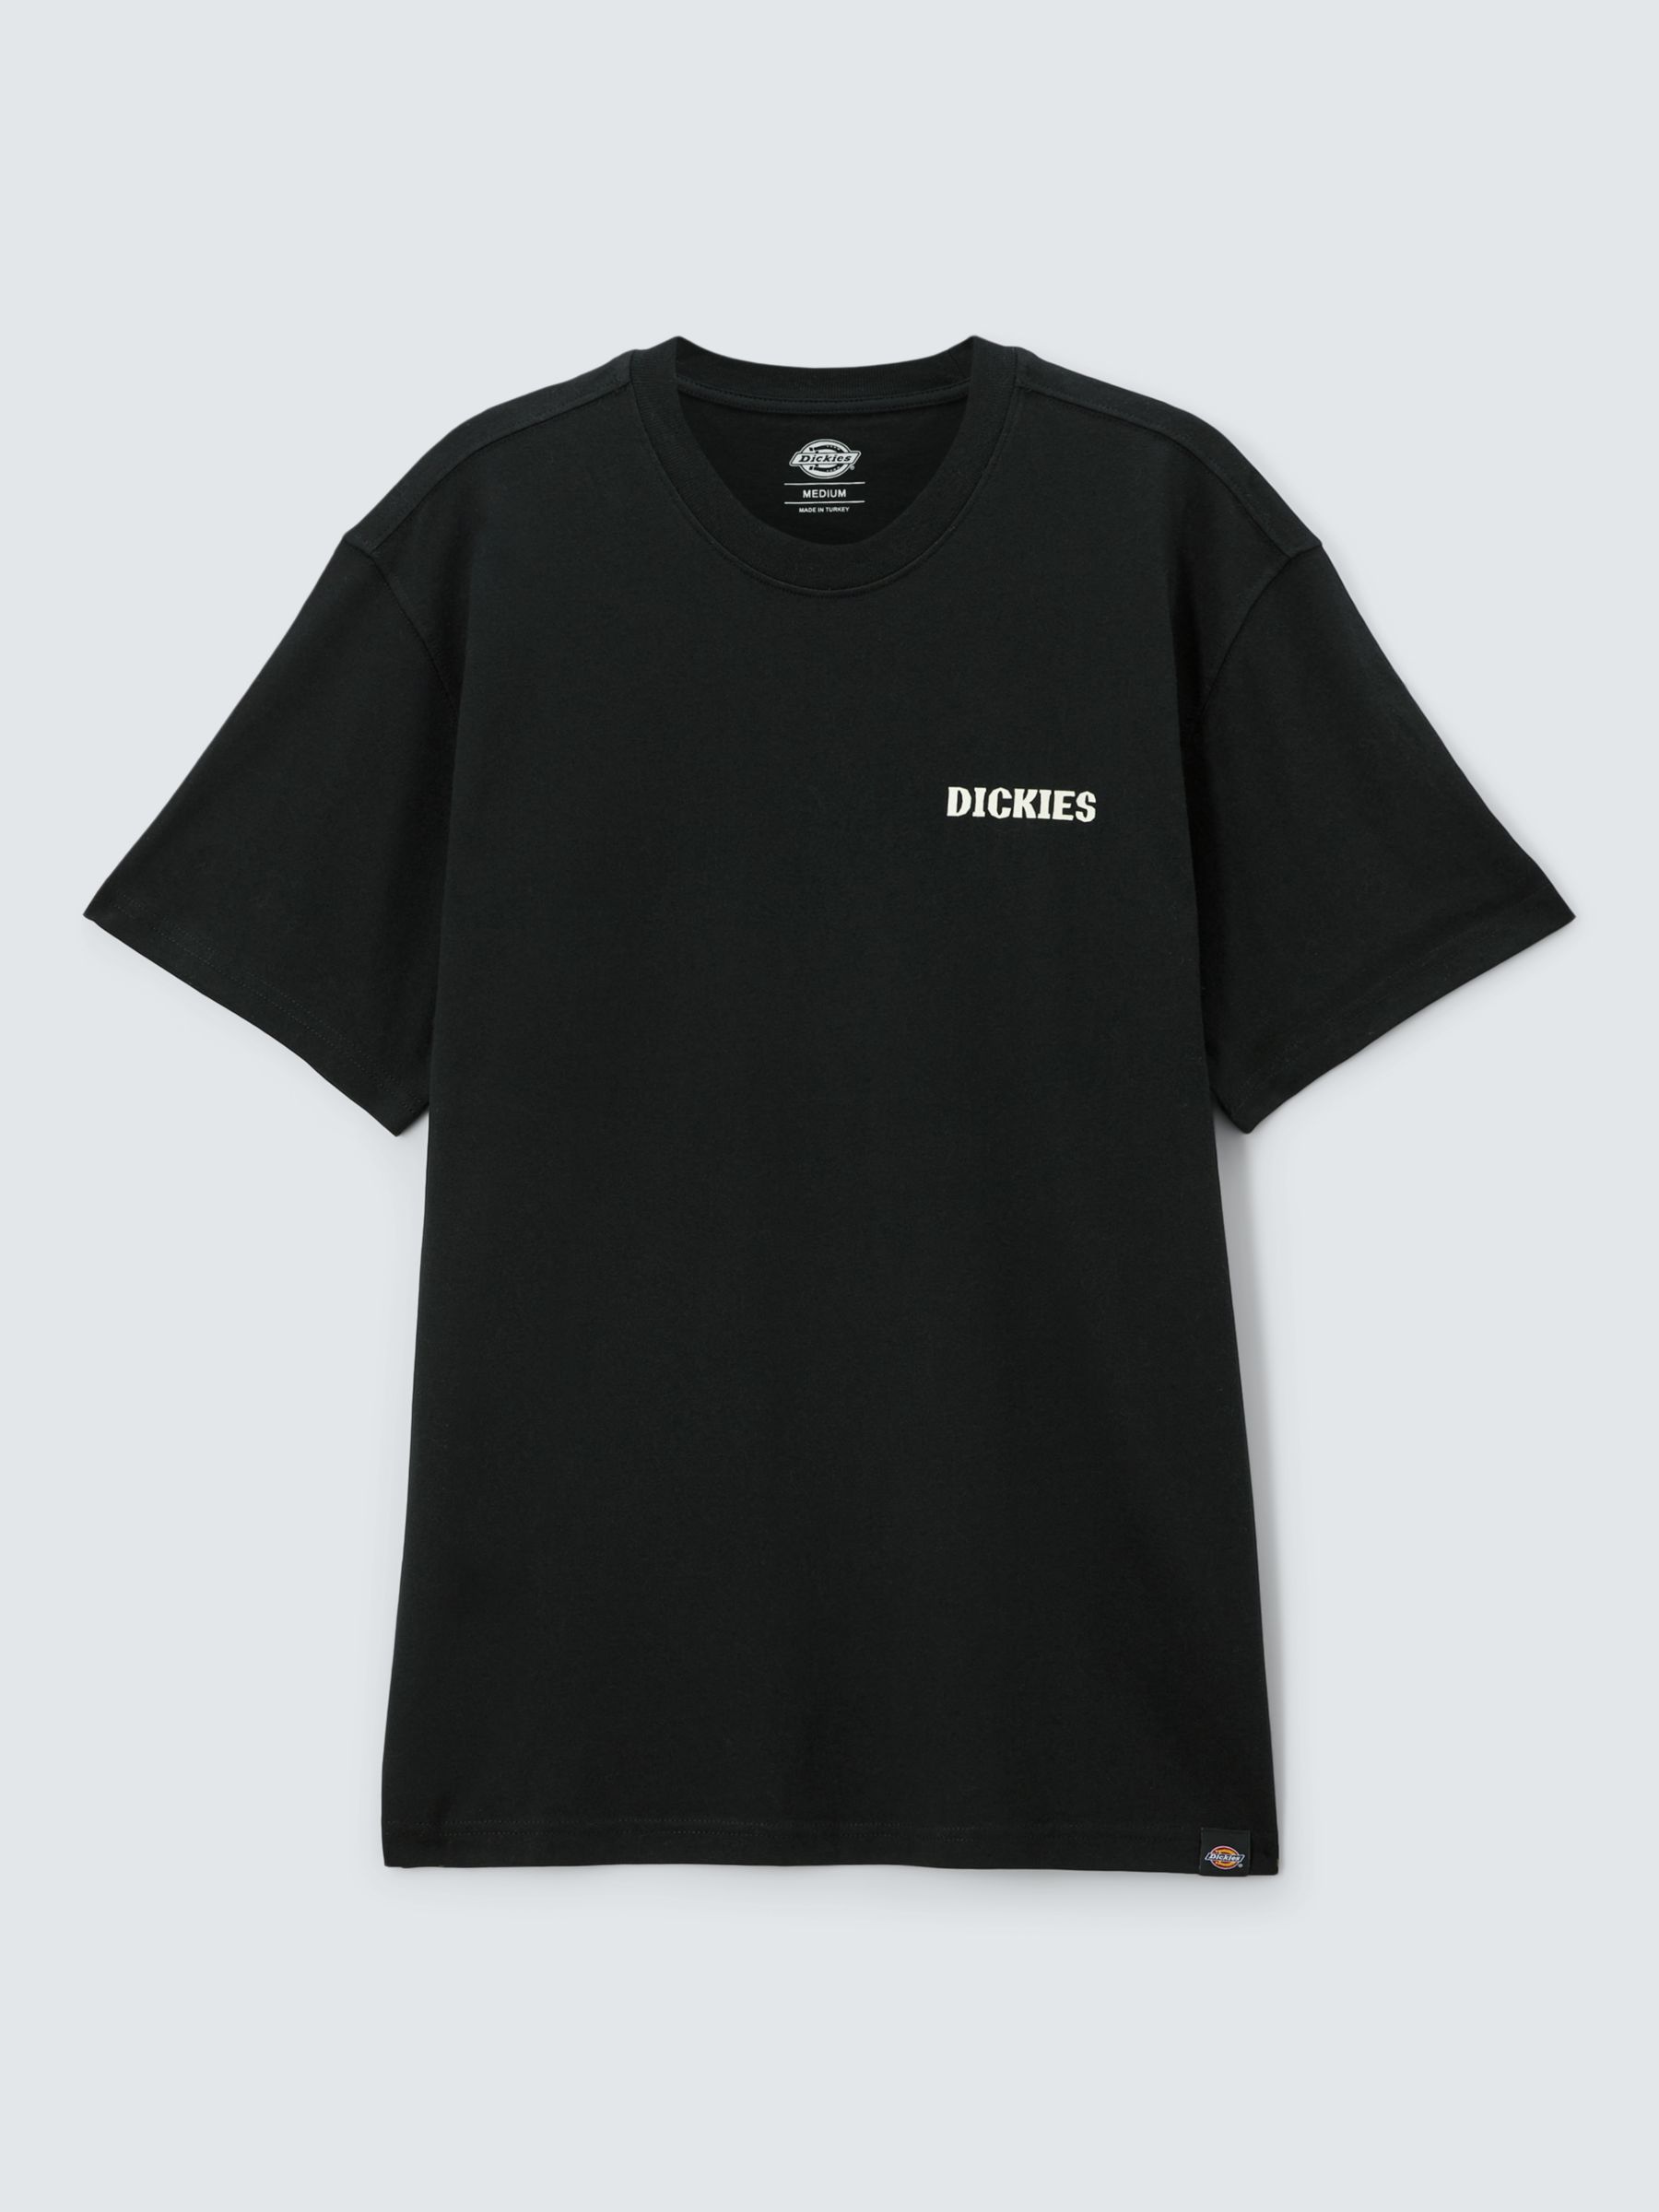 Dickies Hays Short Sleeve T-Shirt, Black at John Lewis & Partners